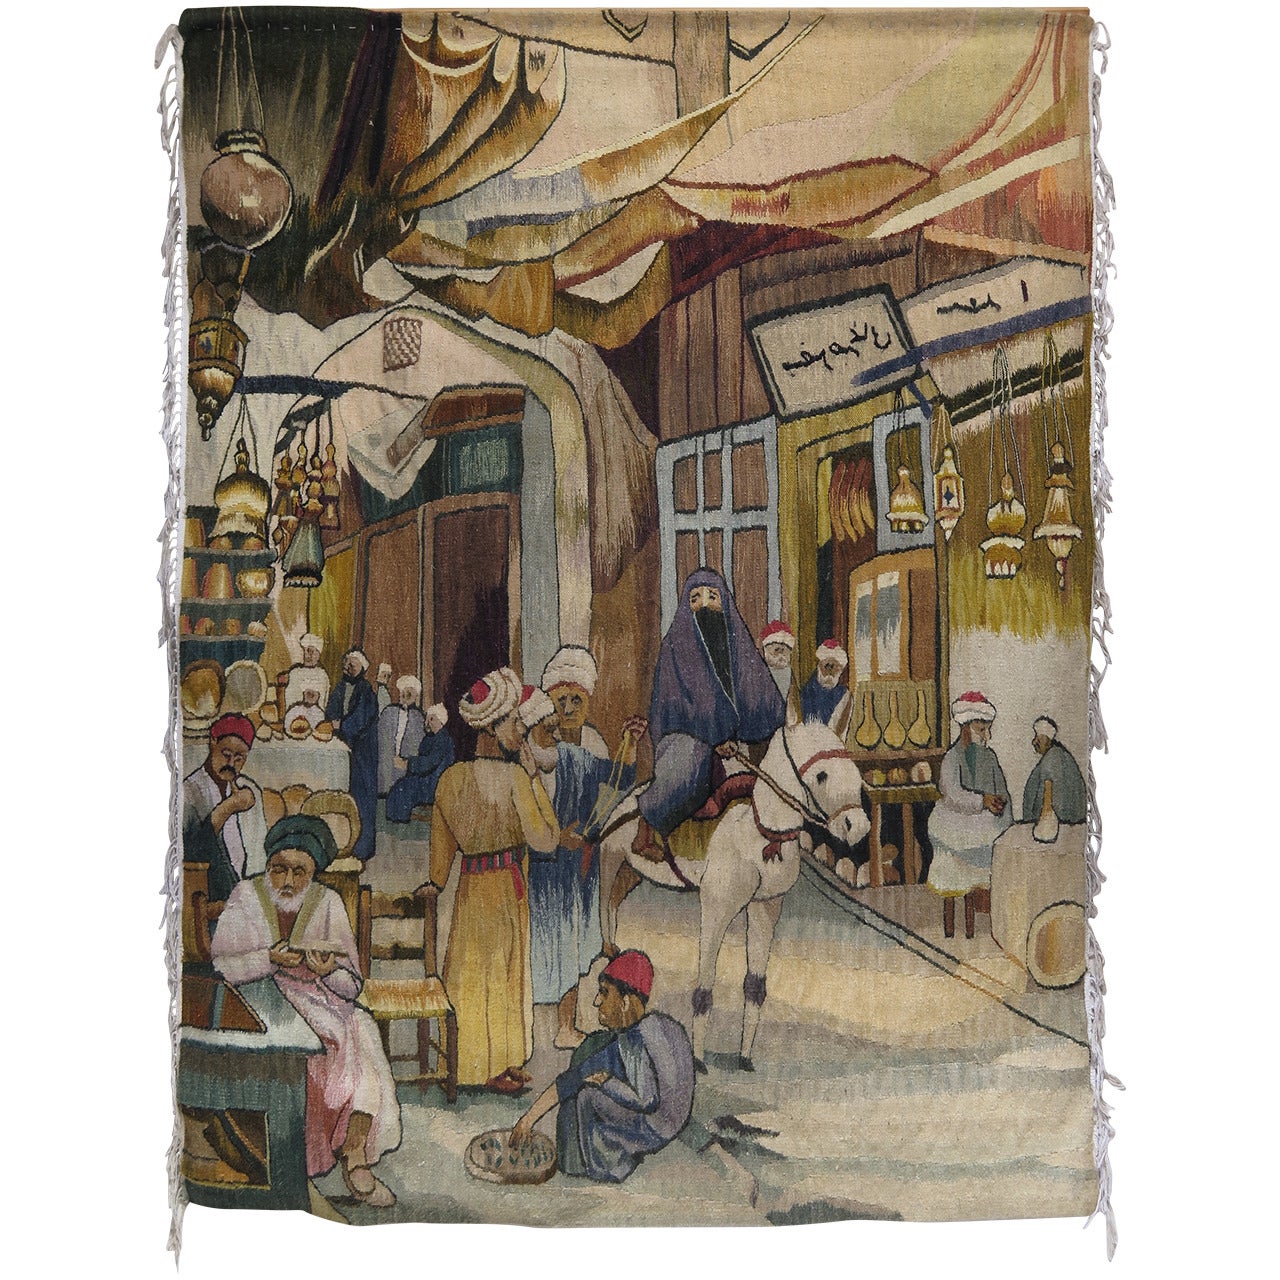 Oriental Tapestry Depicting a Street or Souk Scene